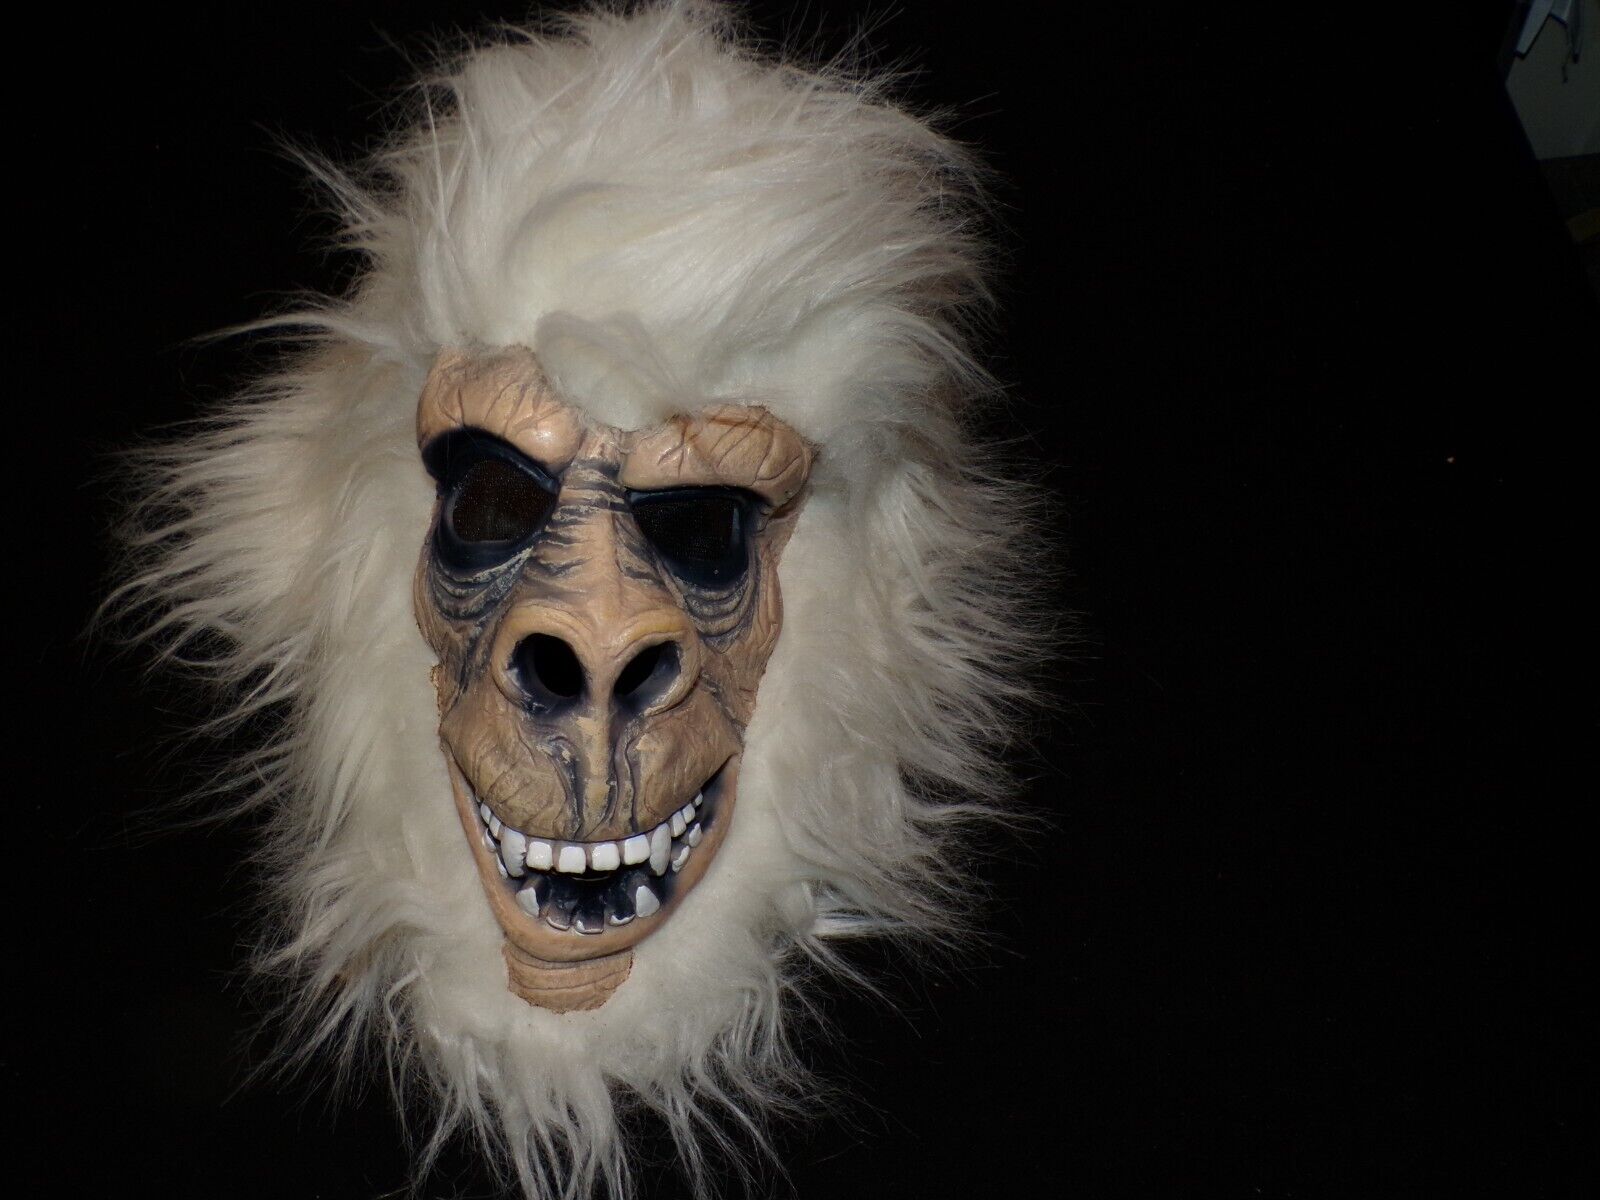 Monkey Ape White Hair Halloween Mask Prop Adult [c538]